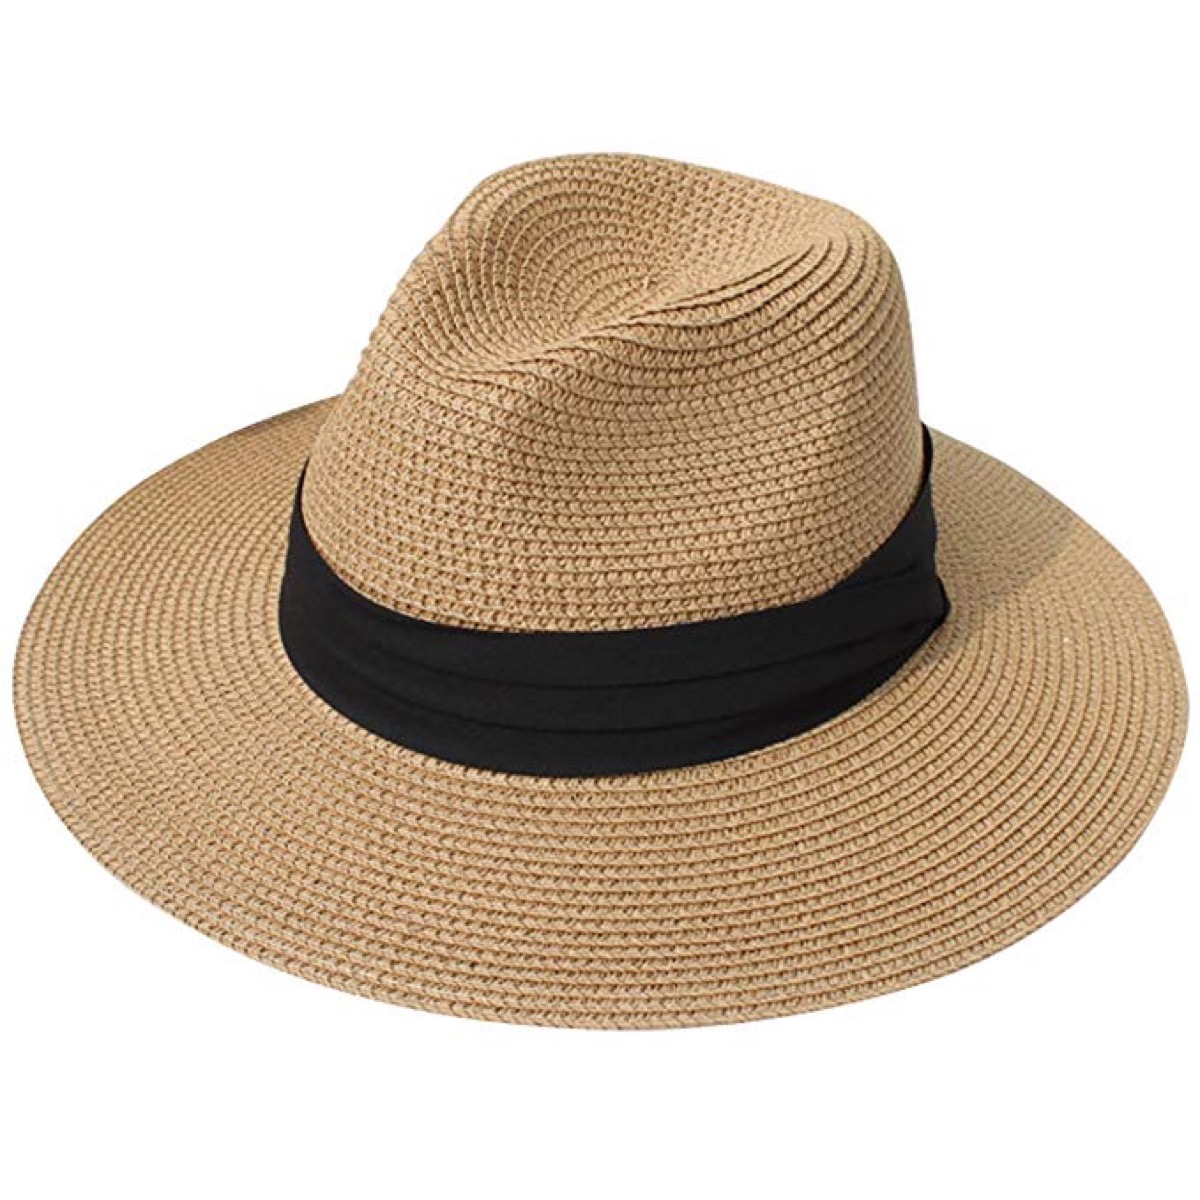 Lanzom Women Wide Brim Straw Panama Roll up Hat Fedora Beach Sun Hat UPF50+ from Amazon